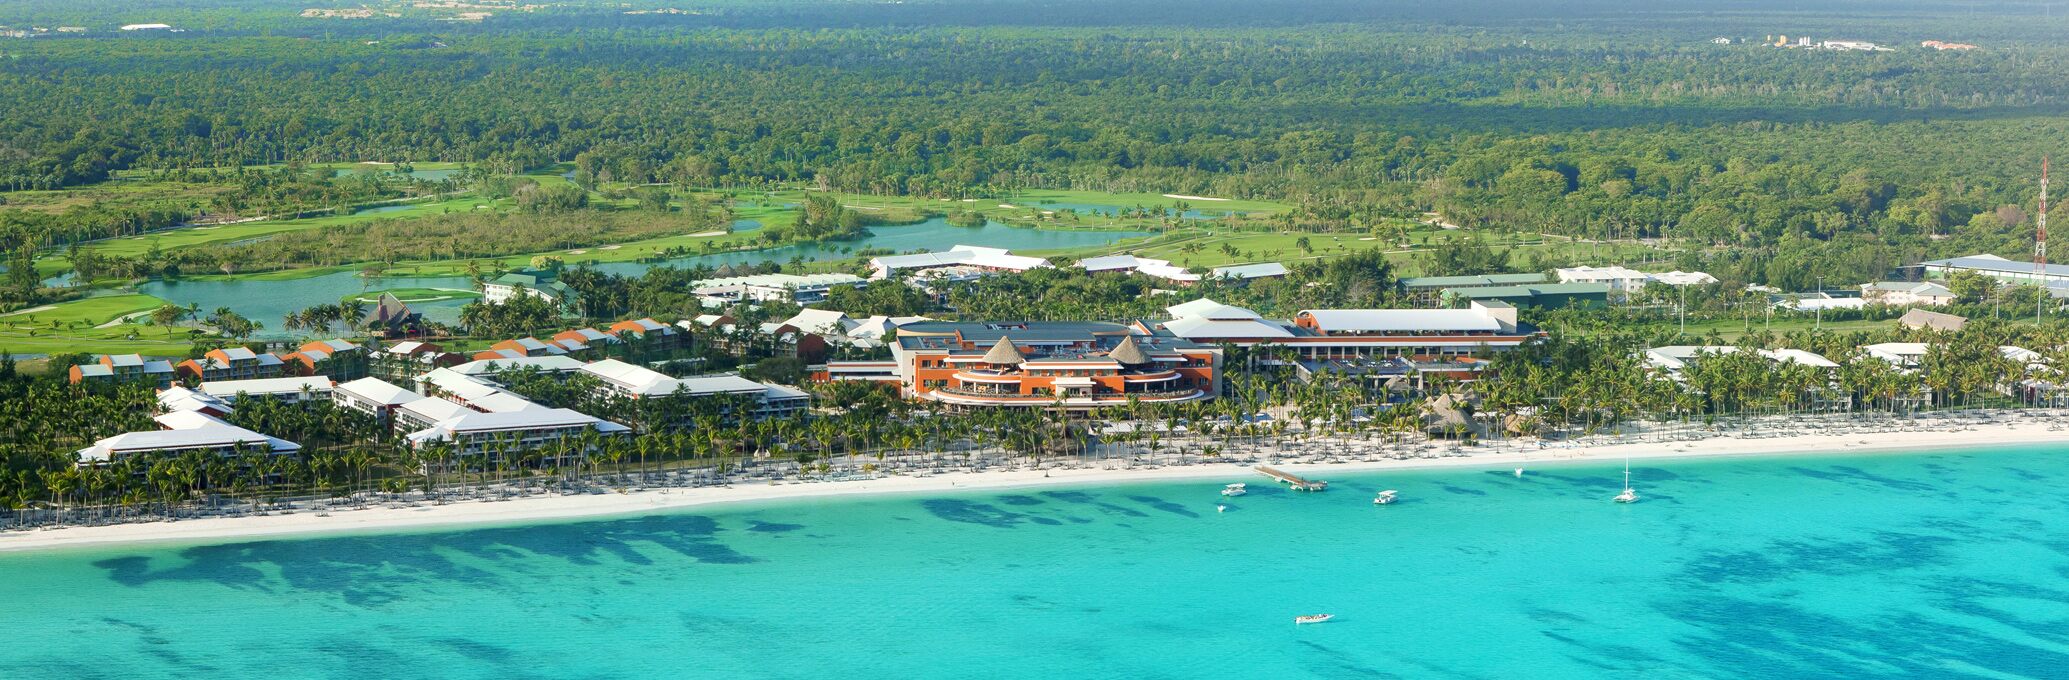 Best Dominican Republic Hotels: Barcelo Bavaro Grand Resort